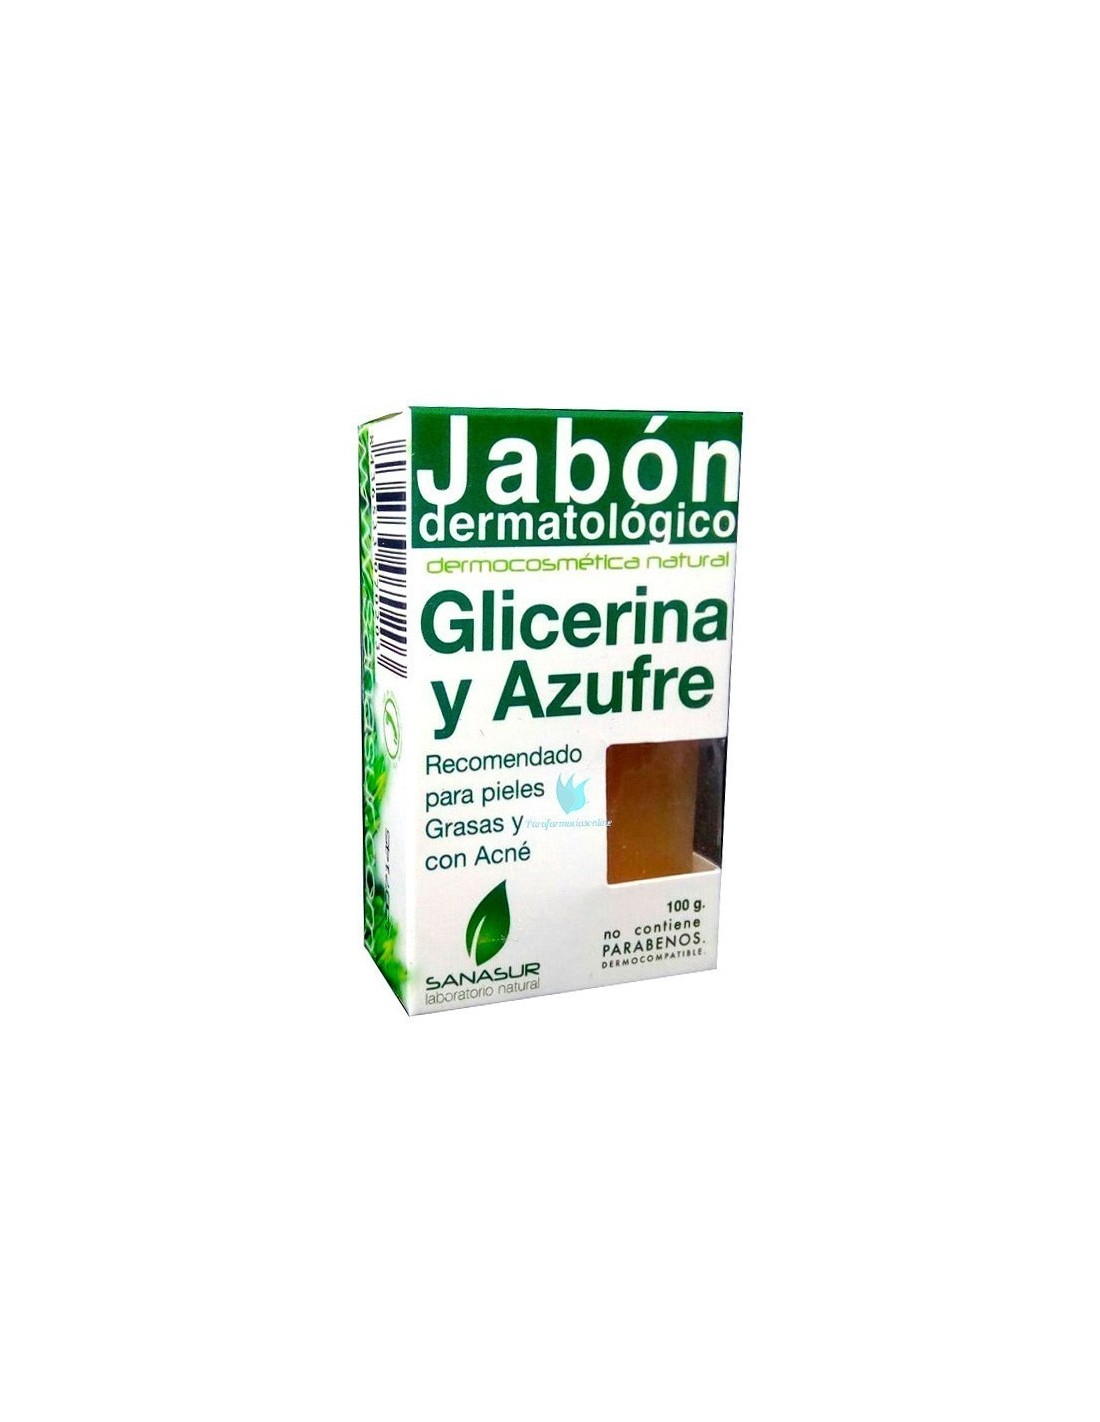 Jabón de Glicerina Natural 100 g